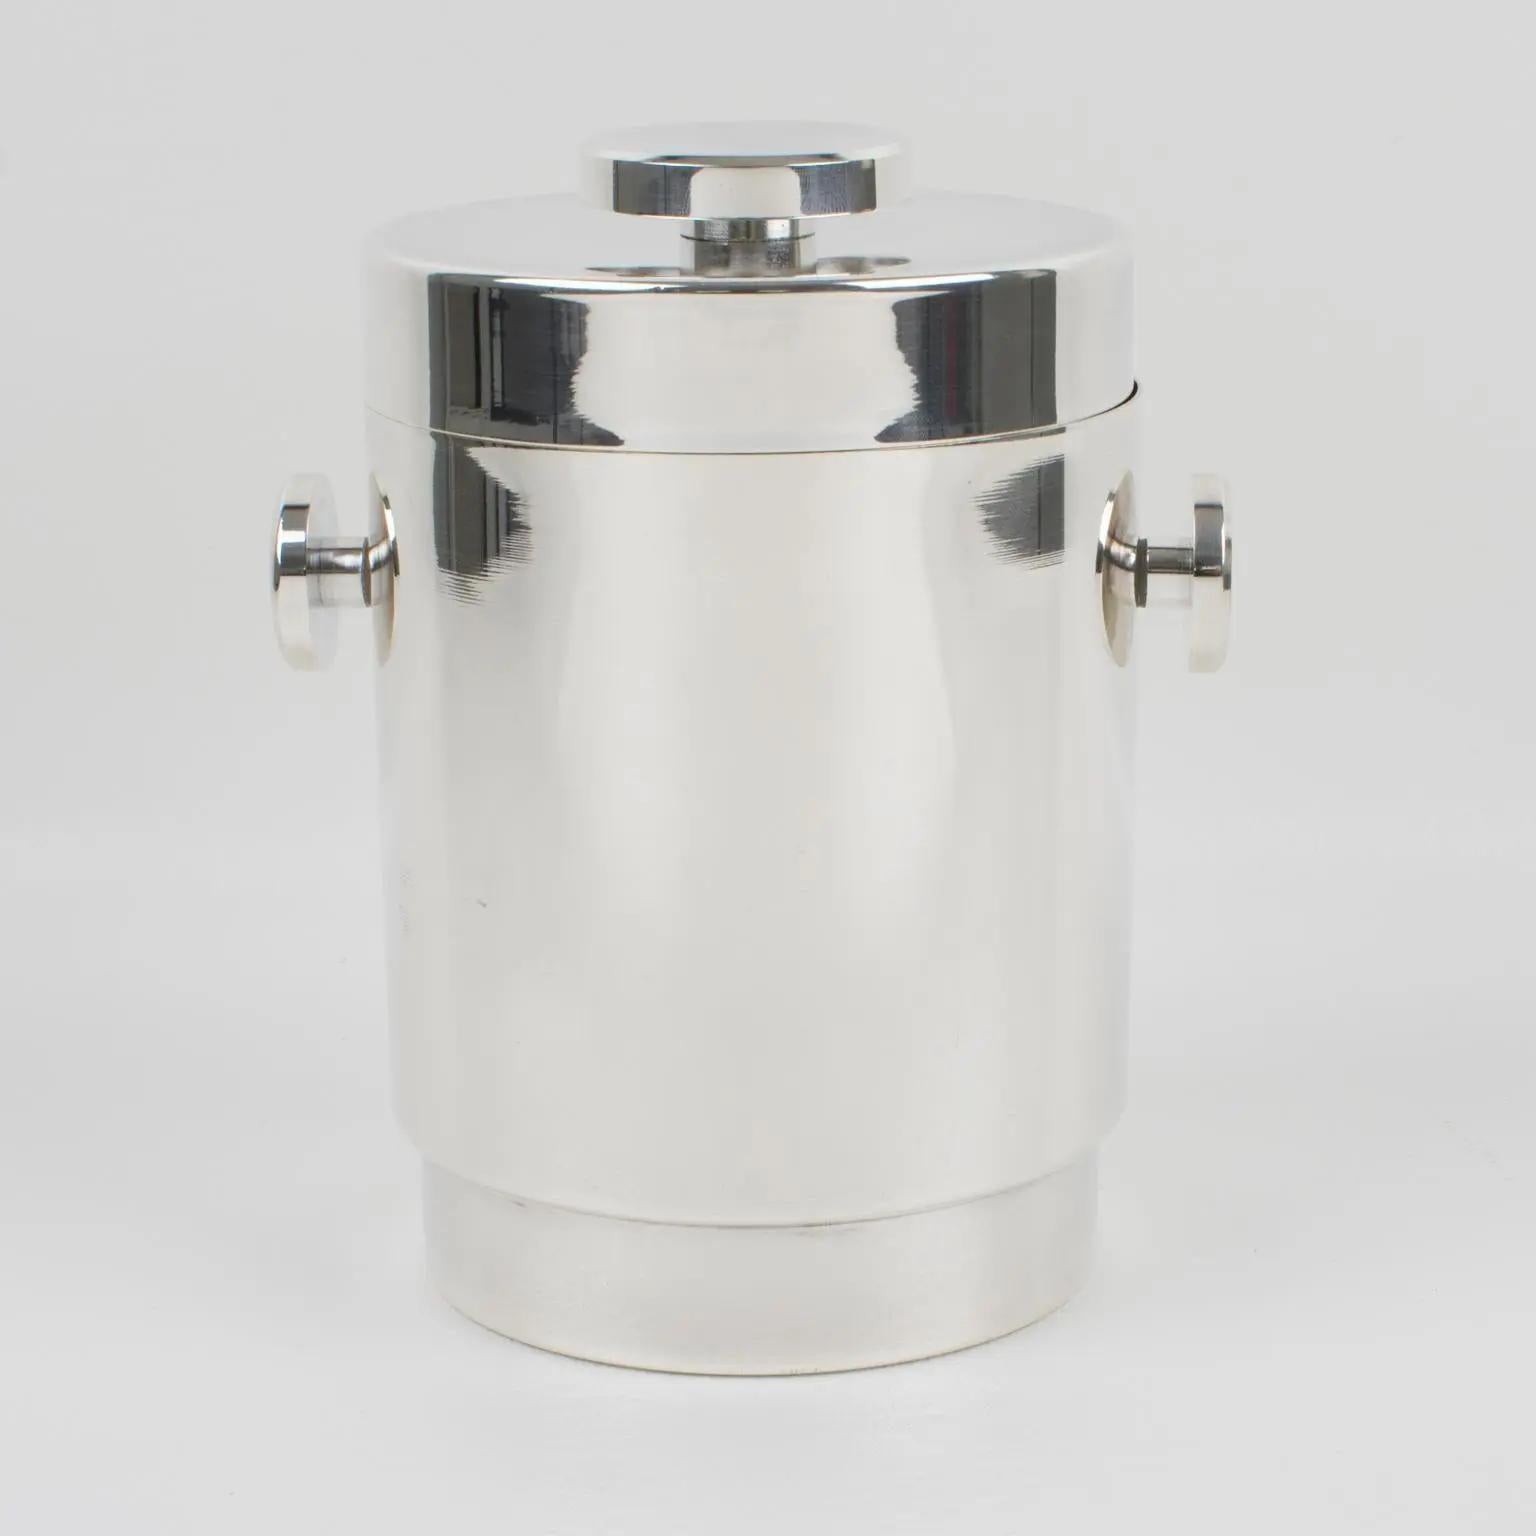 Mid-Century Modern Lancel Silver Plate Ice Bucket Cooler, France 1970s in Original Box